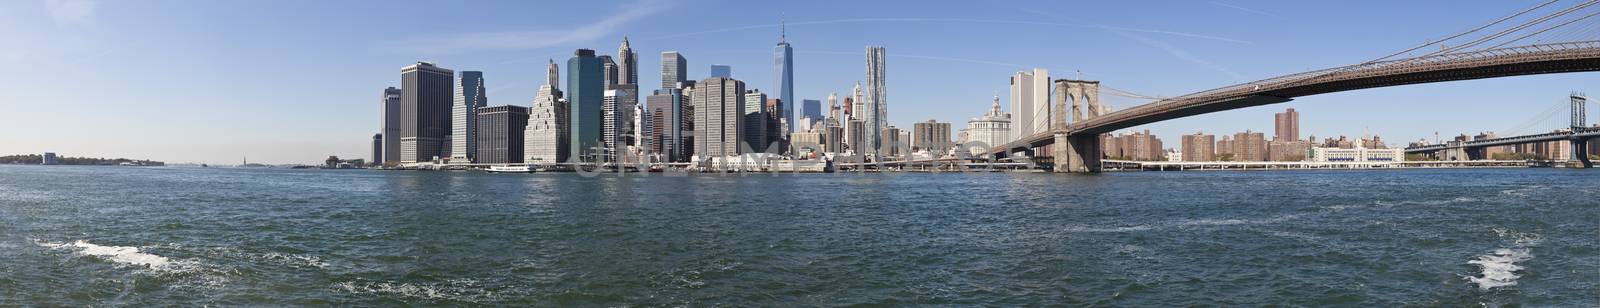 The New York City skyline w Brooklyn Bridge-extra large by hanusst